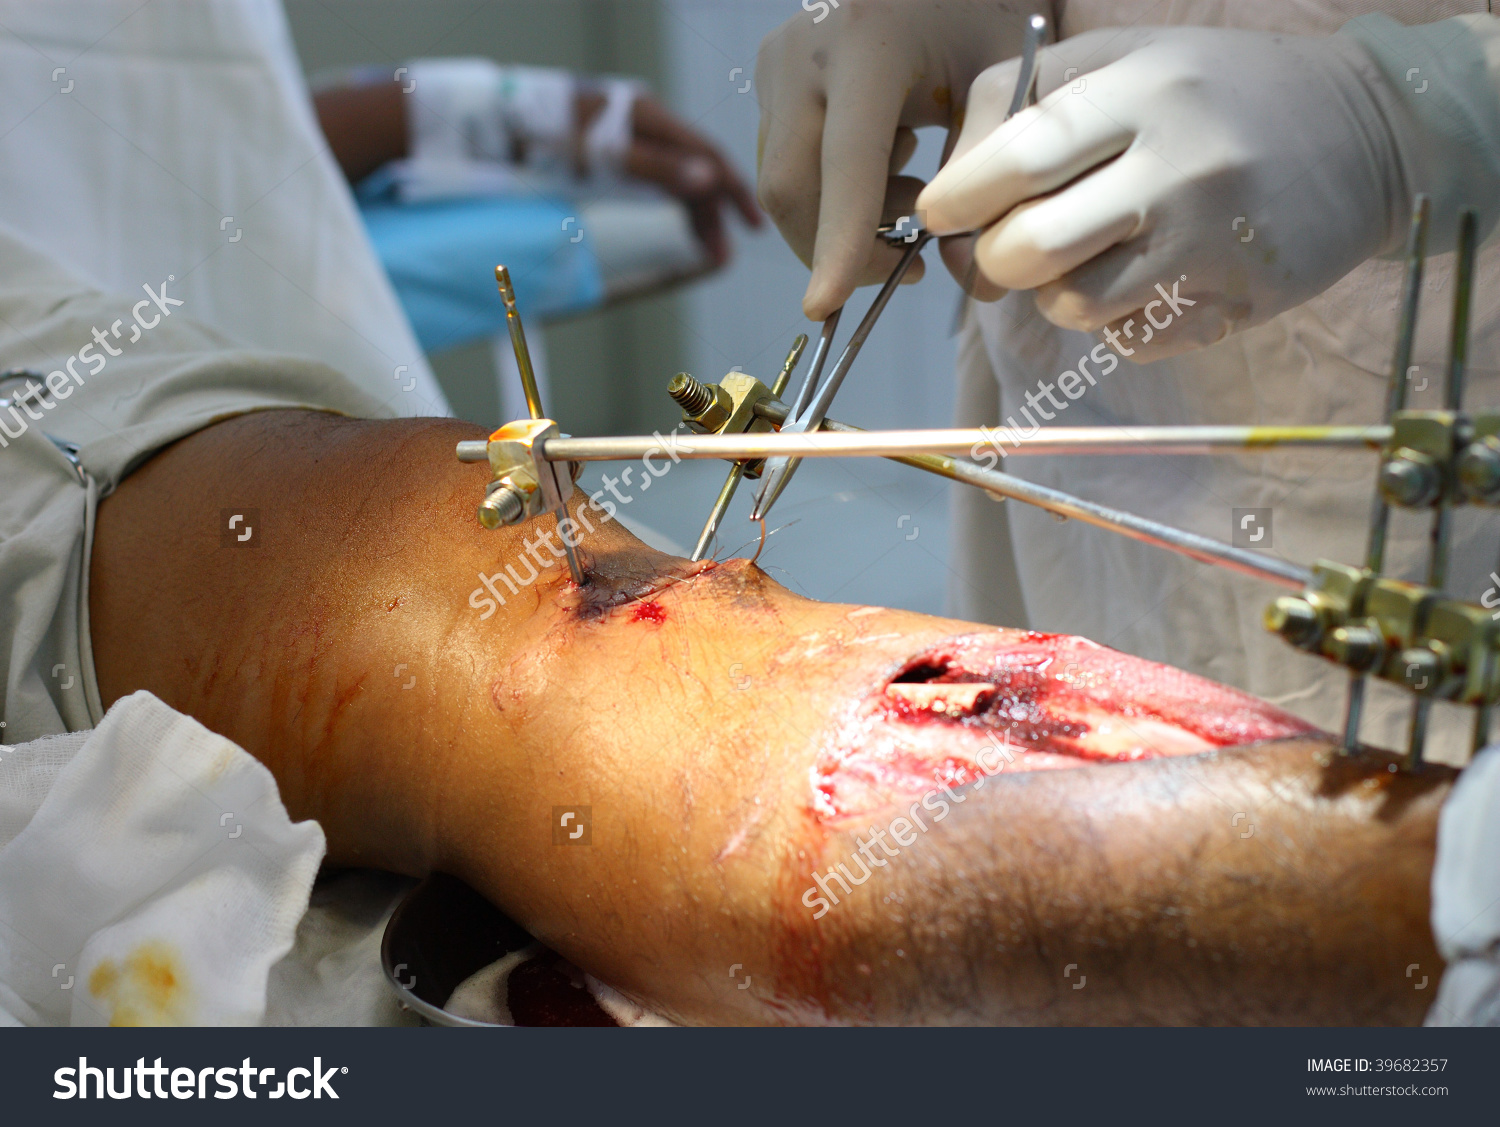 Image result for orthopedic surgeon